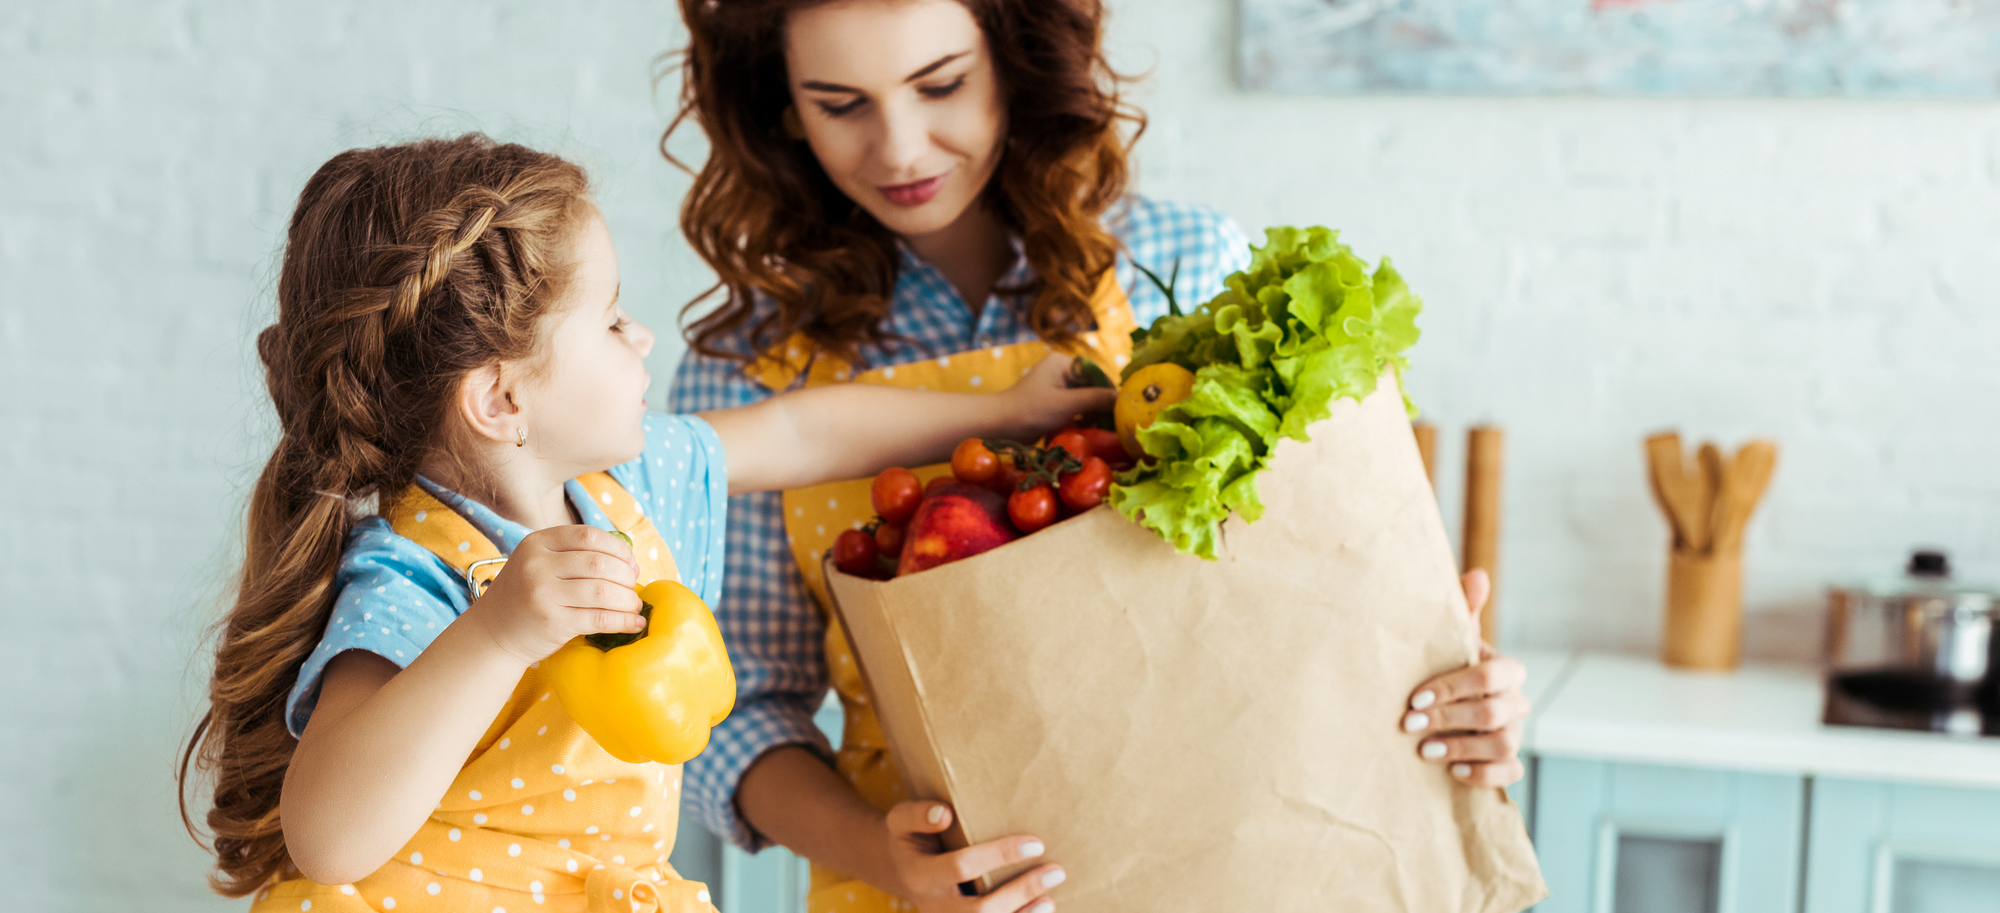 bambini spesa cucinare frutta e verdura